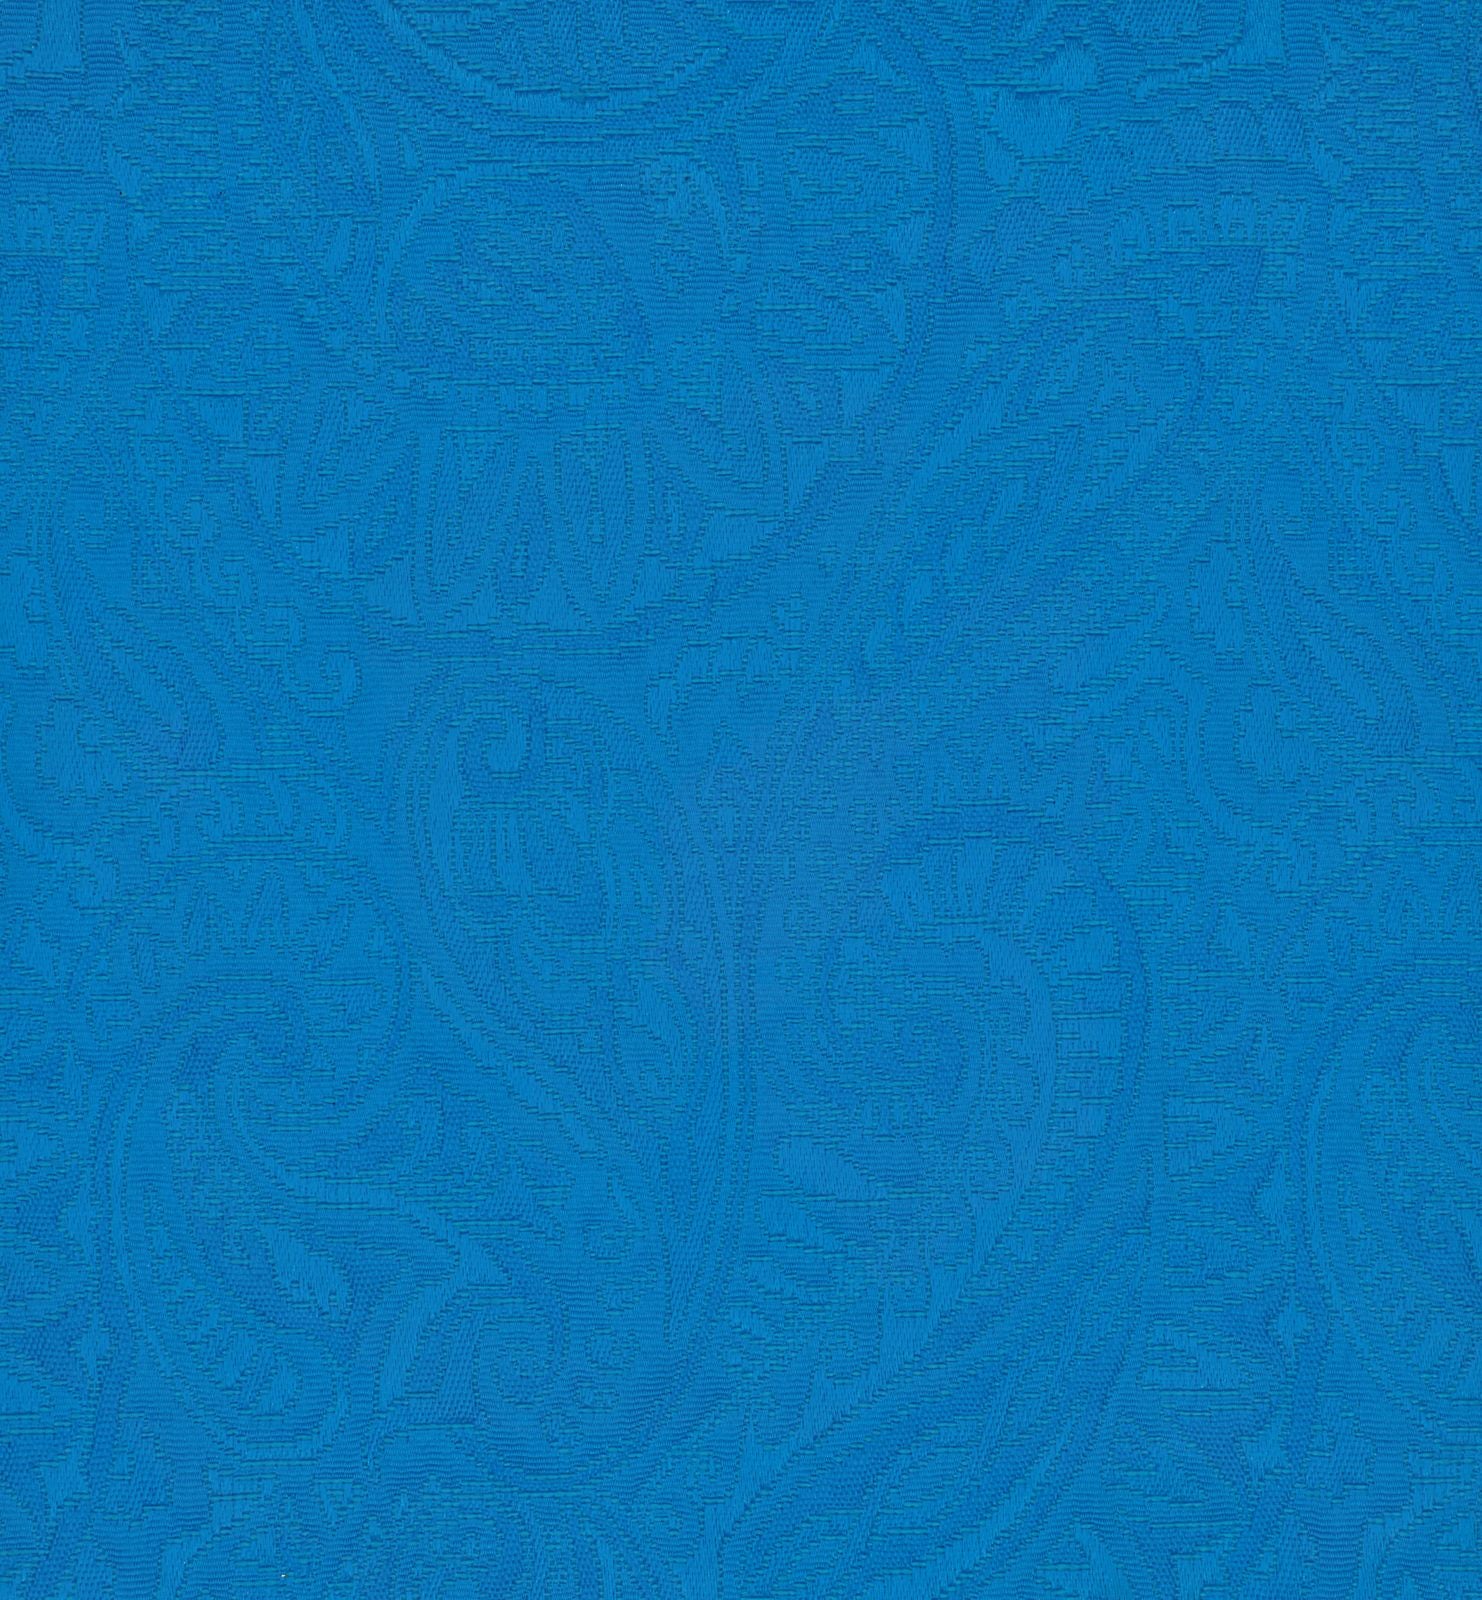 33001-05 Sky Blue Woven Jacqaurd Plain Dyed Blend 296g/yd 54" blend blue cotton jacqaurd plain dyed polyester woven Solid Color, Jacquard - knit fabric - woven fabric - fabric company - fabric wholesale - fabric b2b - fabric factory - high quality fabric - hong kong fabric - fabric hk - acetate fabric - cotton fabric - linen fabric - metallic fabric - nylon fabric - polyester fabric - spandex fabric - chun wing hing - cwh hk - fabric worldwide ship - 針織布 - 梳織布 - 布料公司- 布料批發 - 香港布料 - 秦榮興